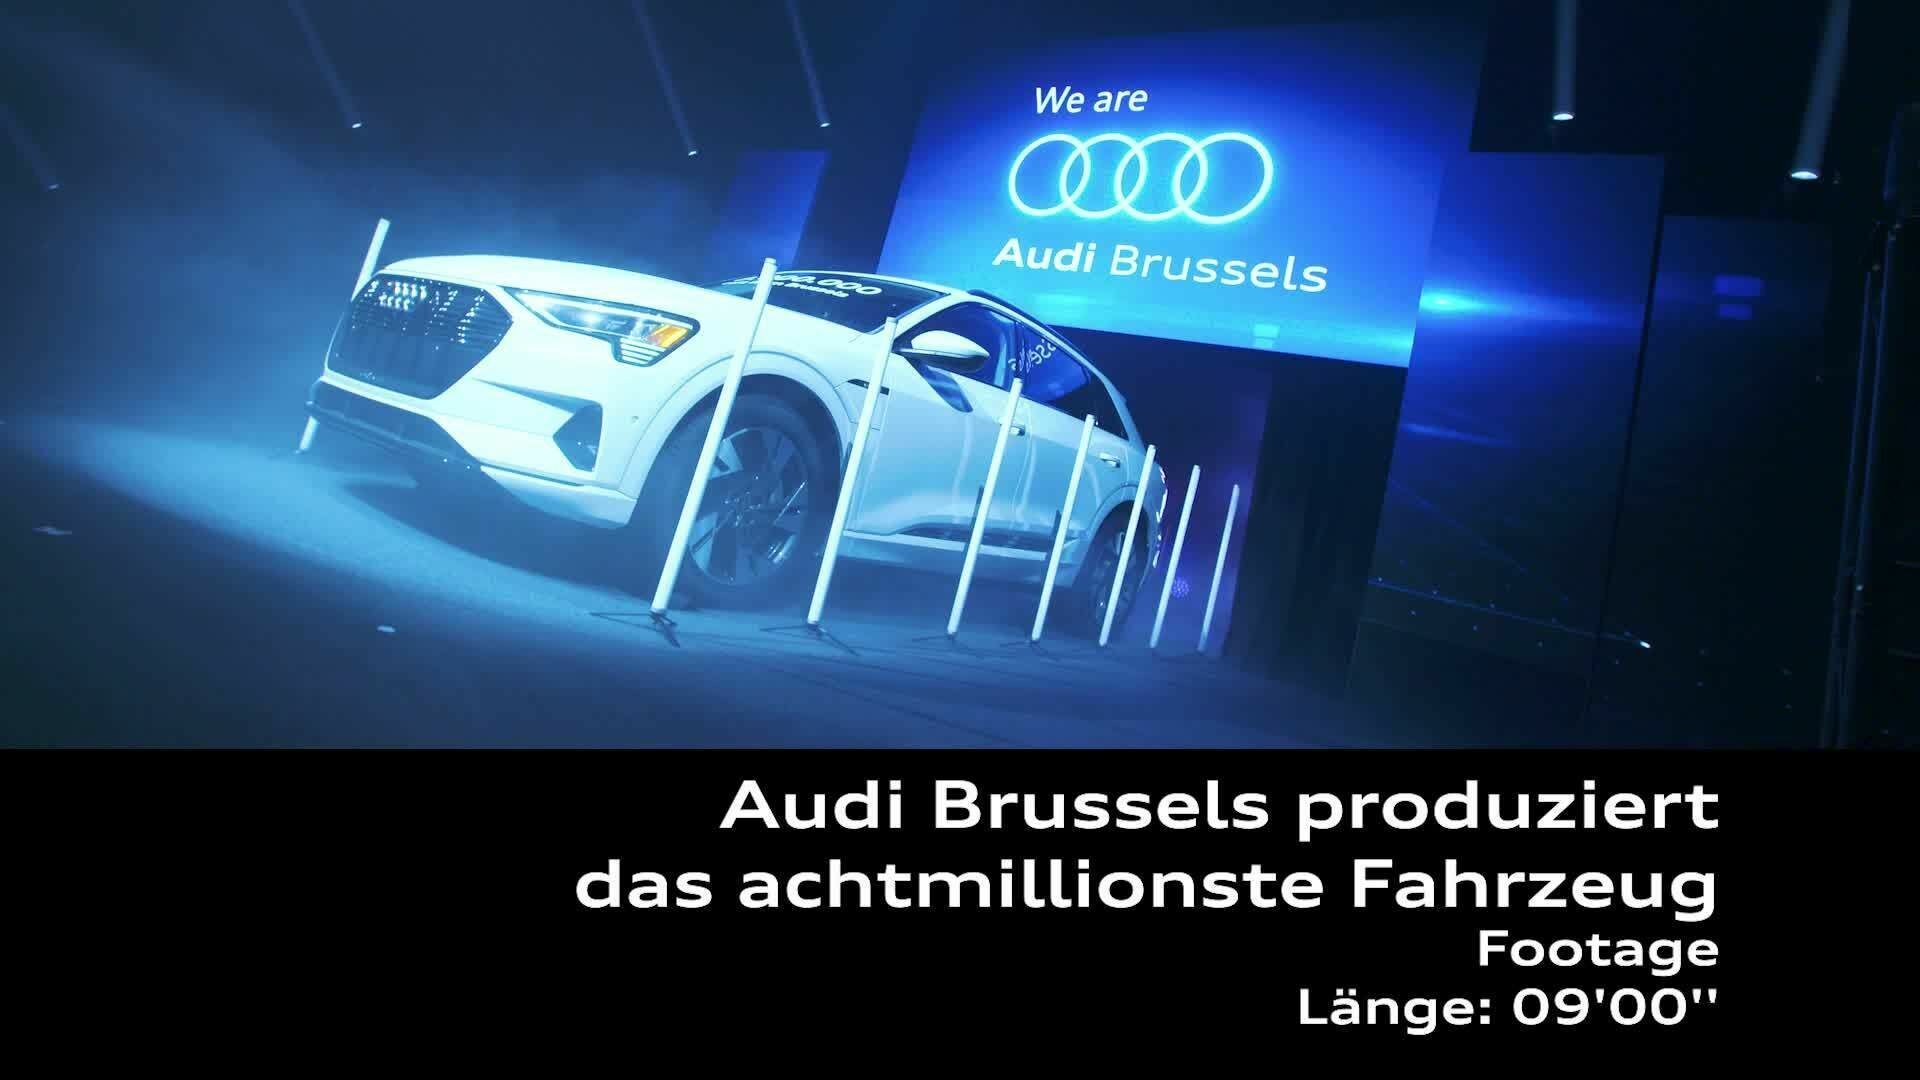 Footage: Audi Brussels produziert das achtmillionste Fahrzeug